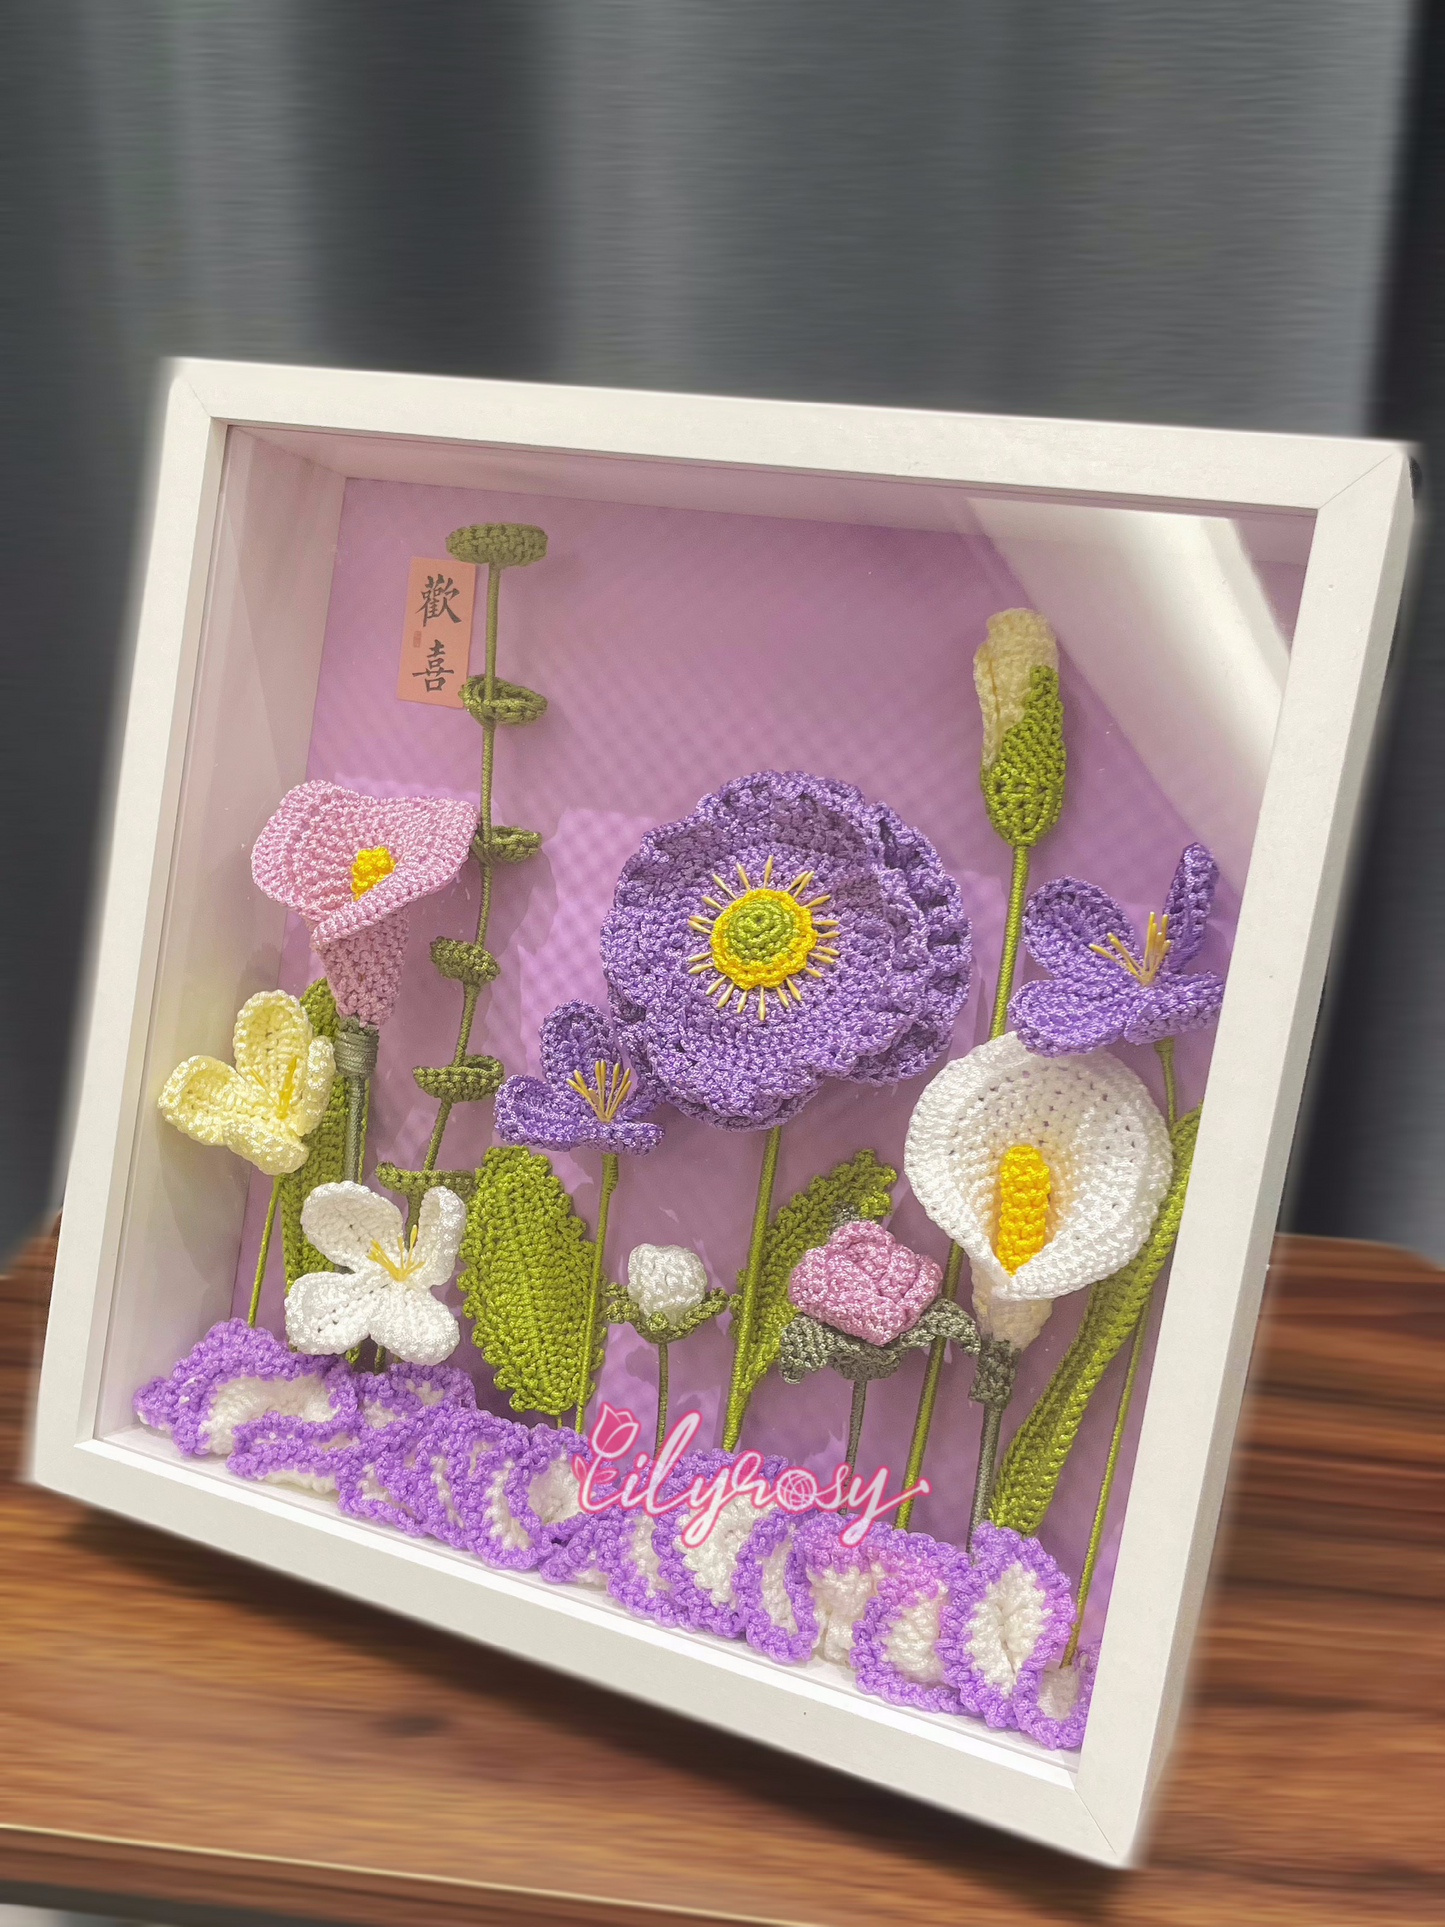 Handmade gifts|Crochet purple flowers  photo frame ,table  Decor, Office decor,home decor